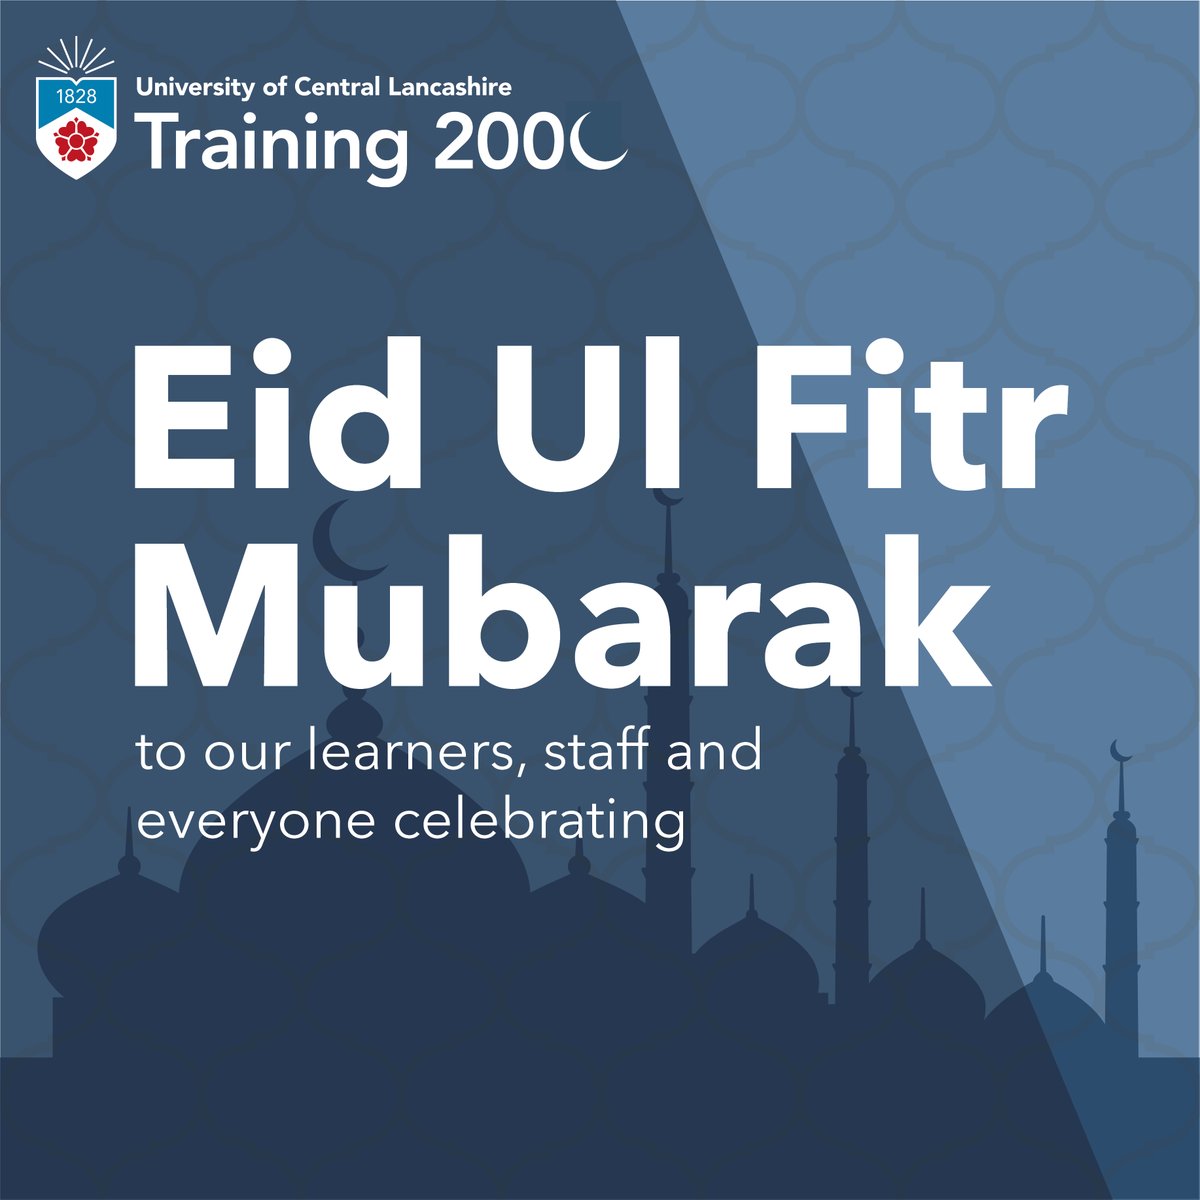 We would like to wish all Training 2000 learners and staff celebrating, Eid-ul-fitr Mubarak 🌟